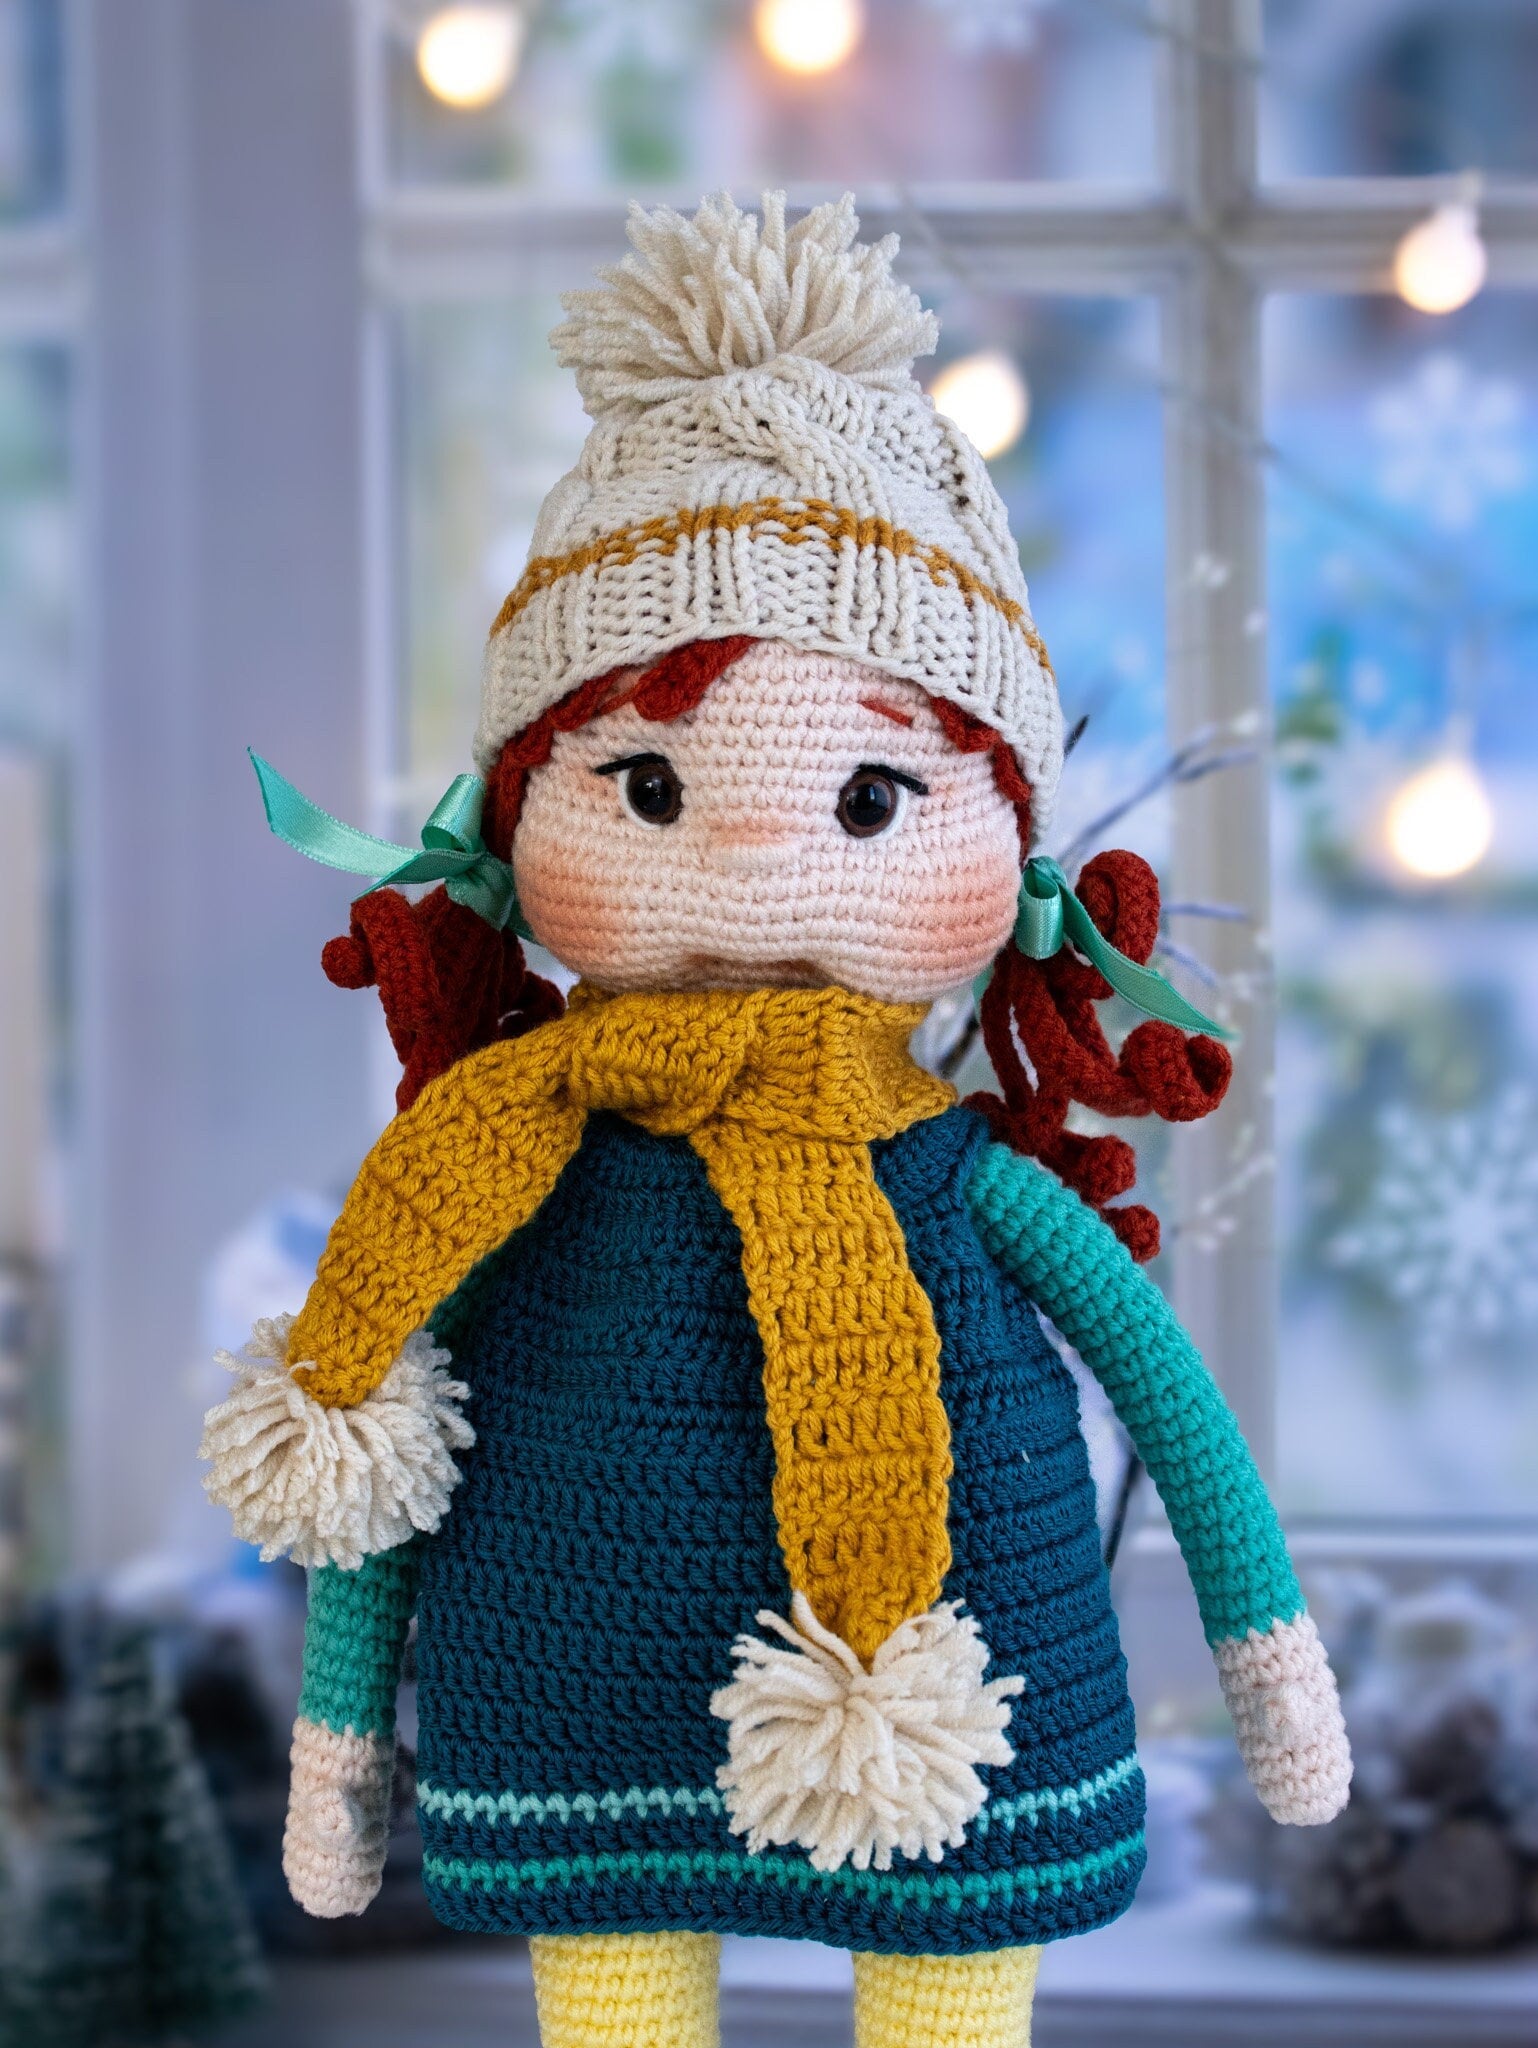 Crochet Doll Elif, Amigurumi Doll, Christmas Amigurumi, Knitted Doll, Daughter Gift, Handmade Doll, Granddaughter Gift, Yarn Dolls, Niece